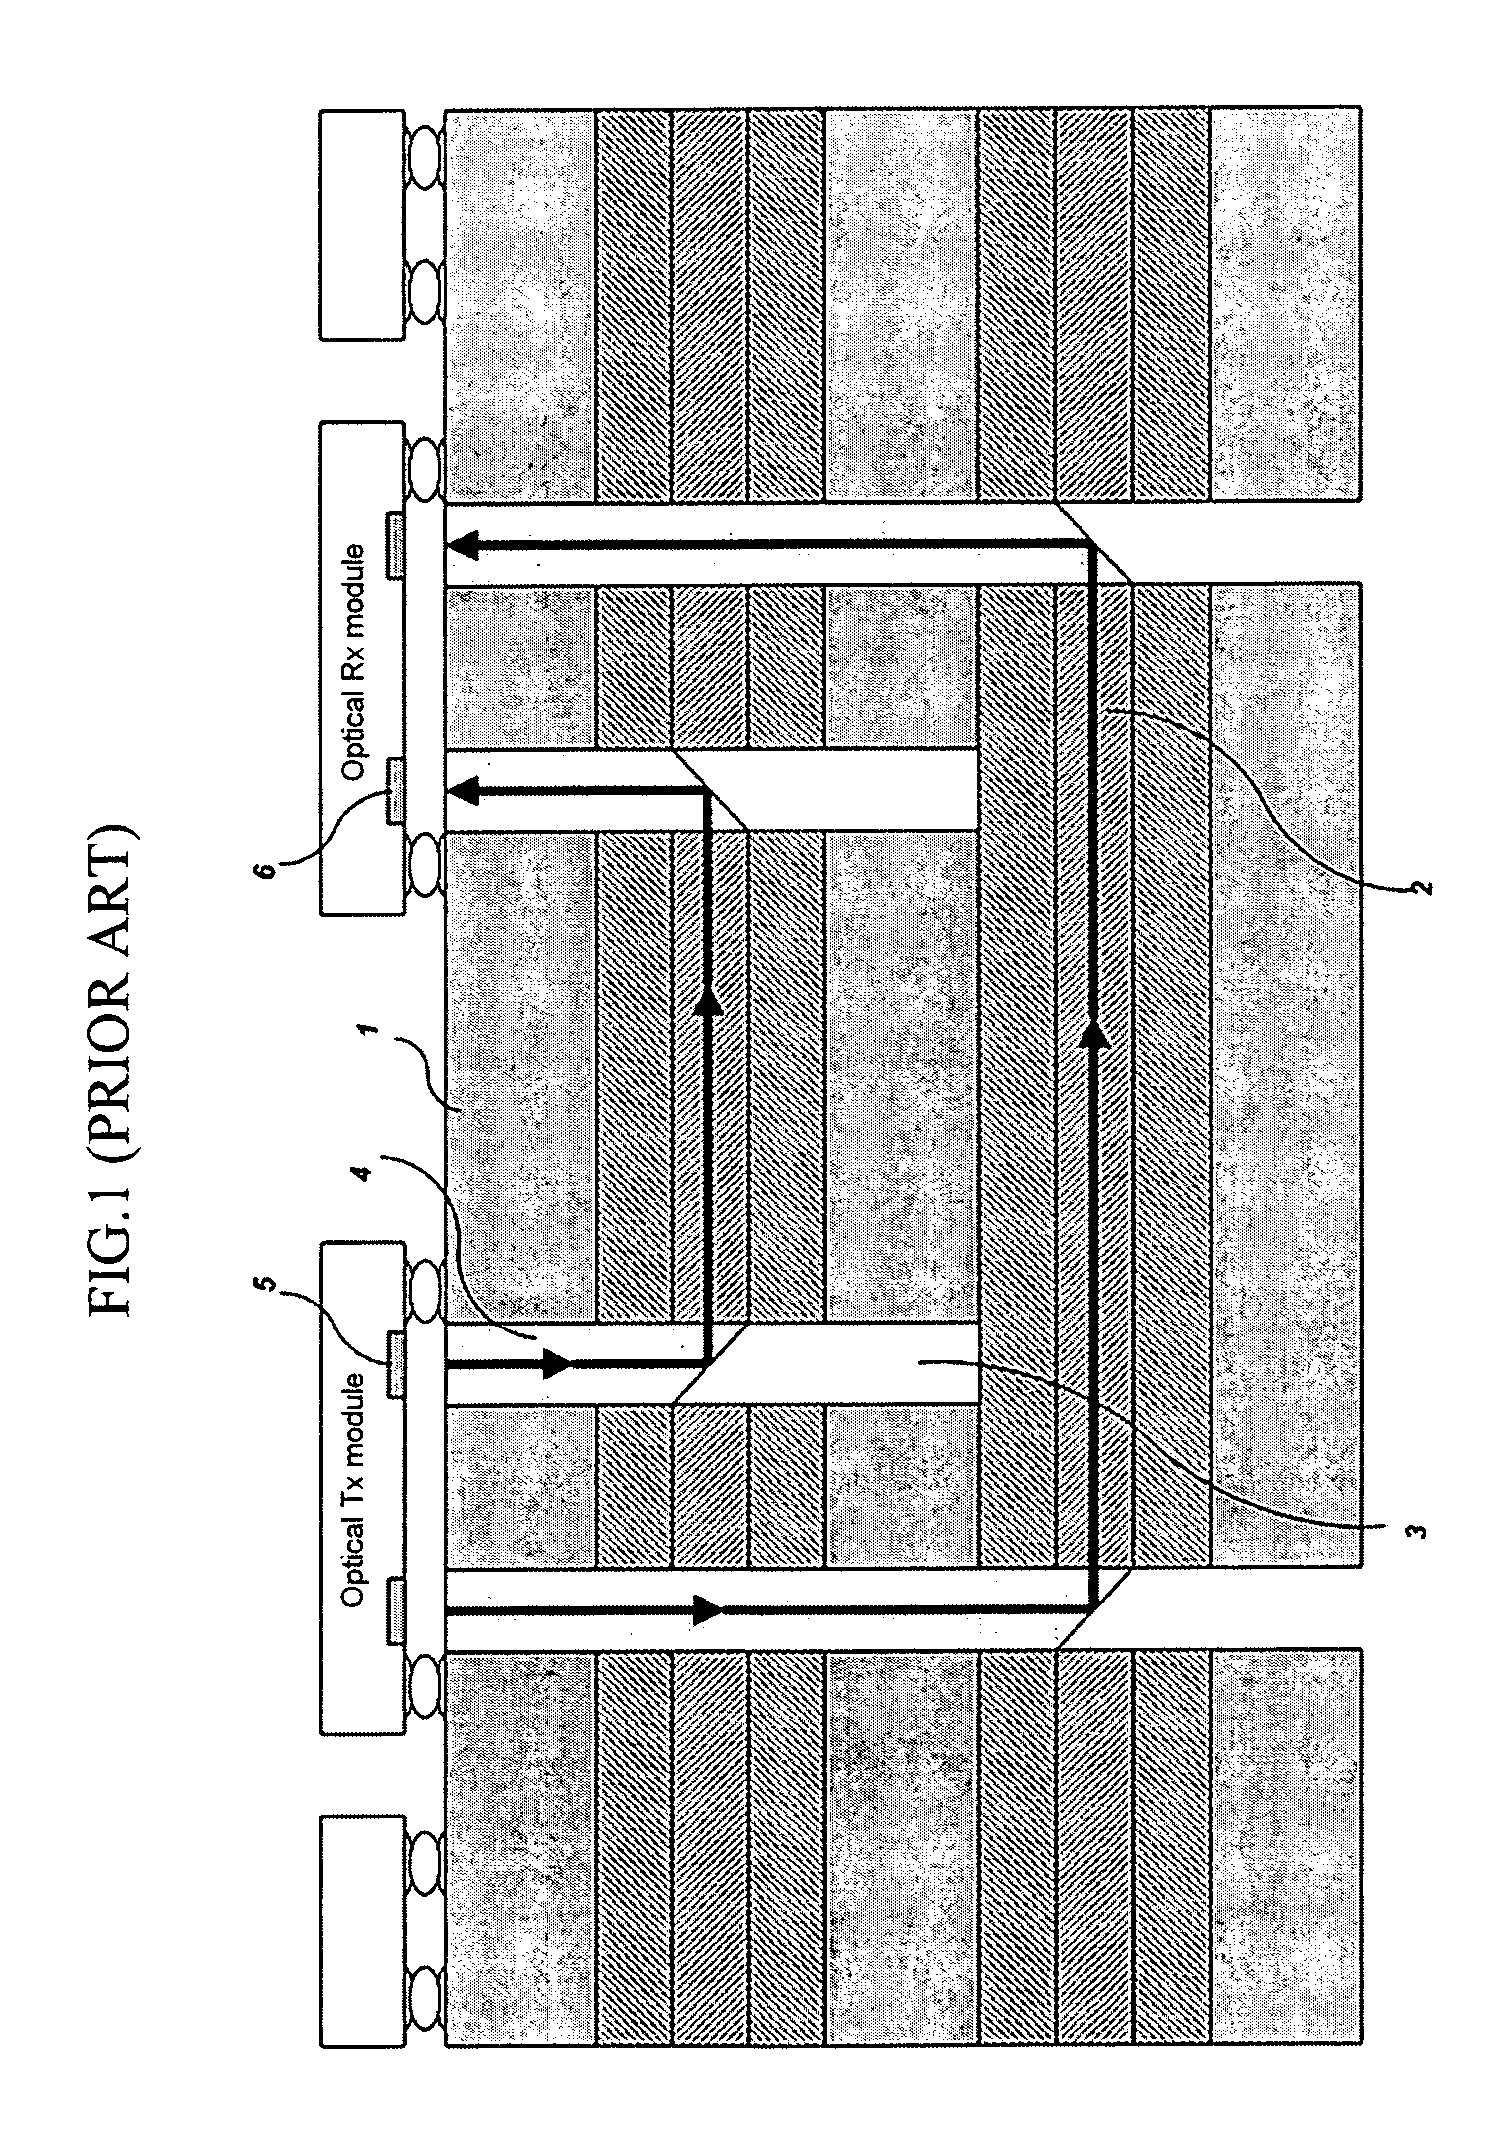 Optical printed circuit board and optical interconnection block using optical fiber bundle